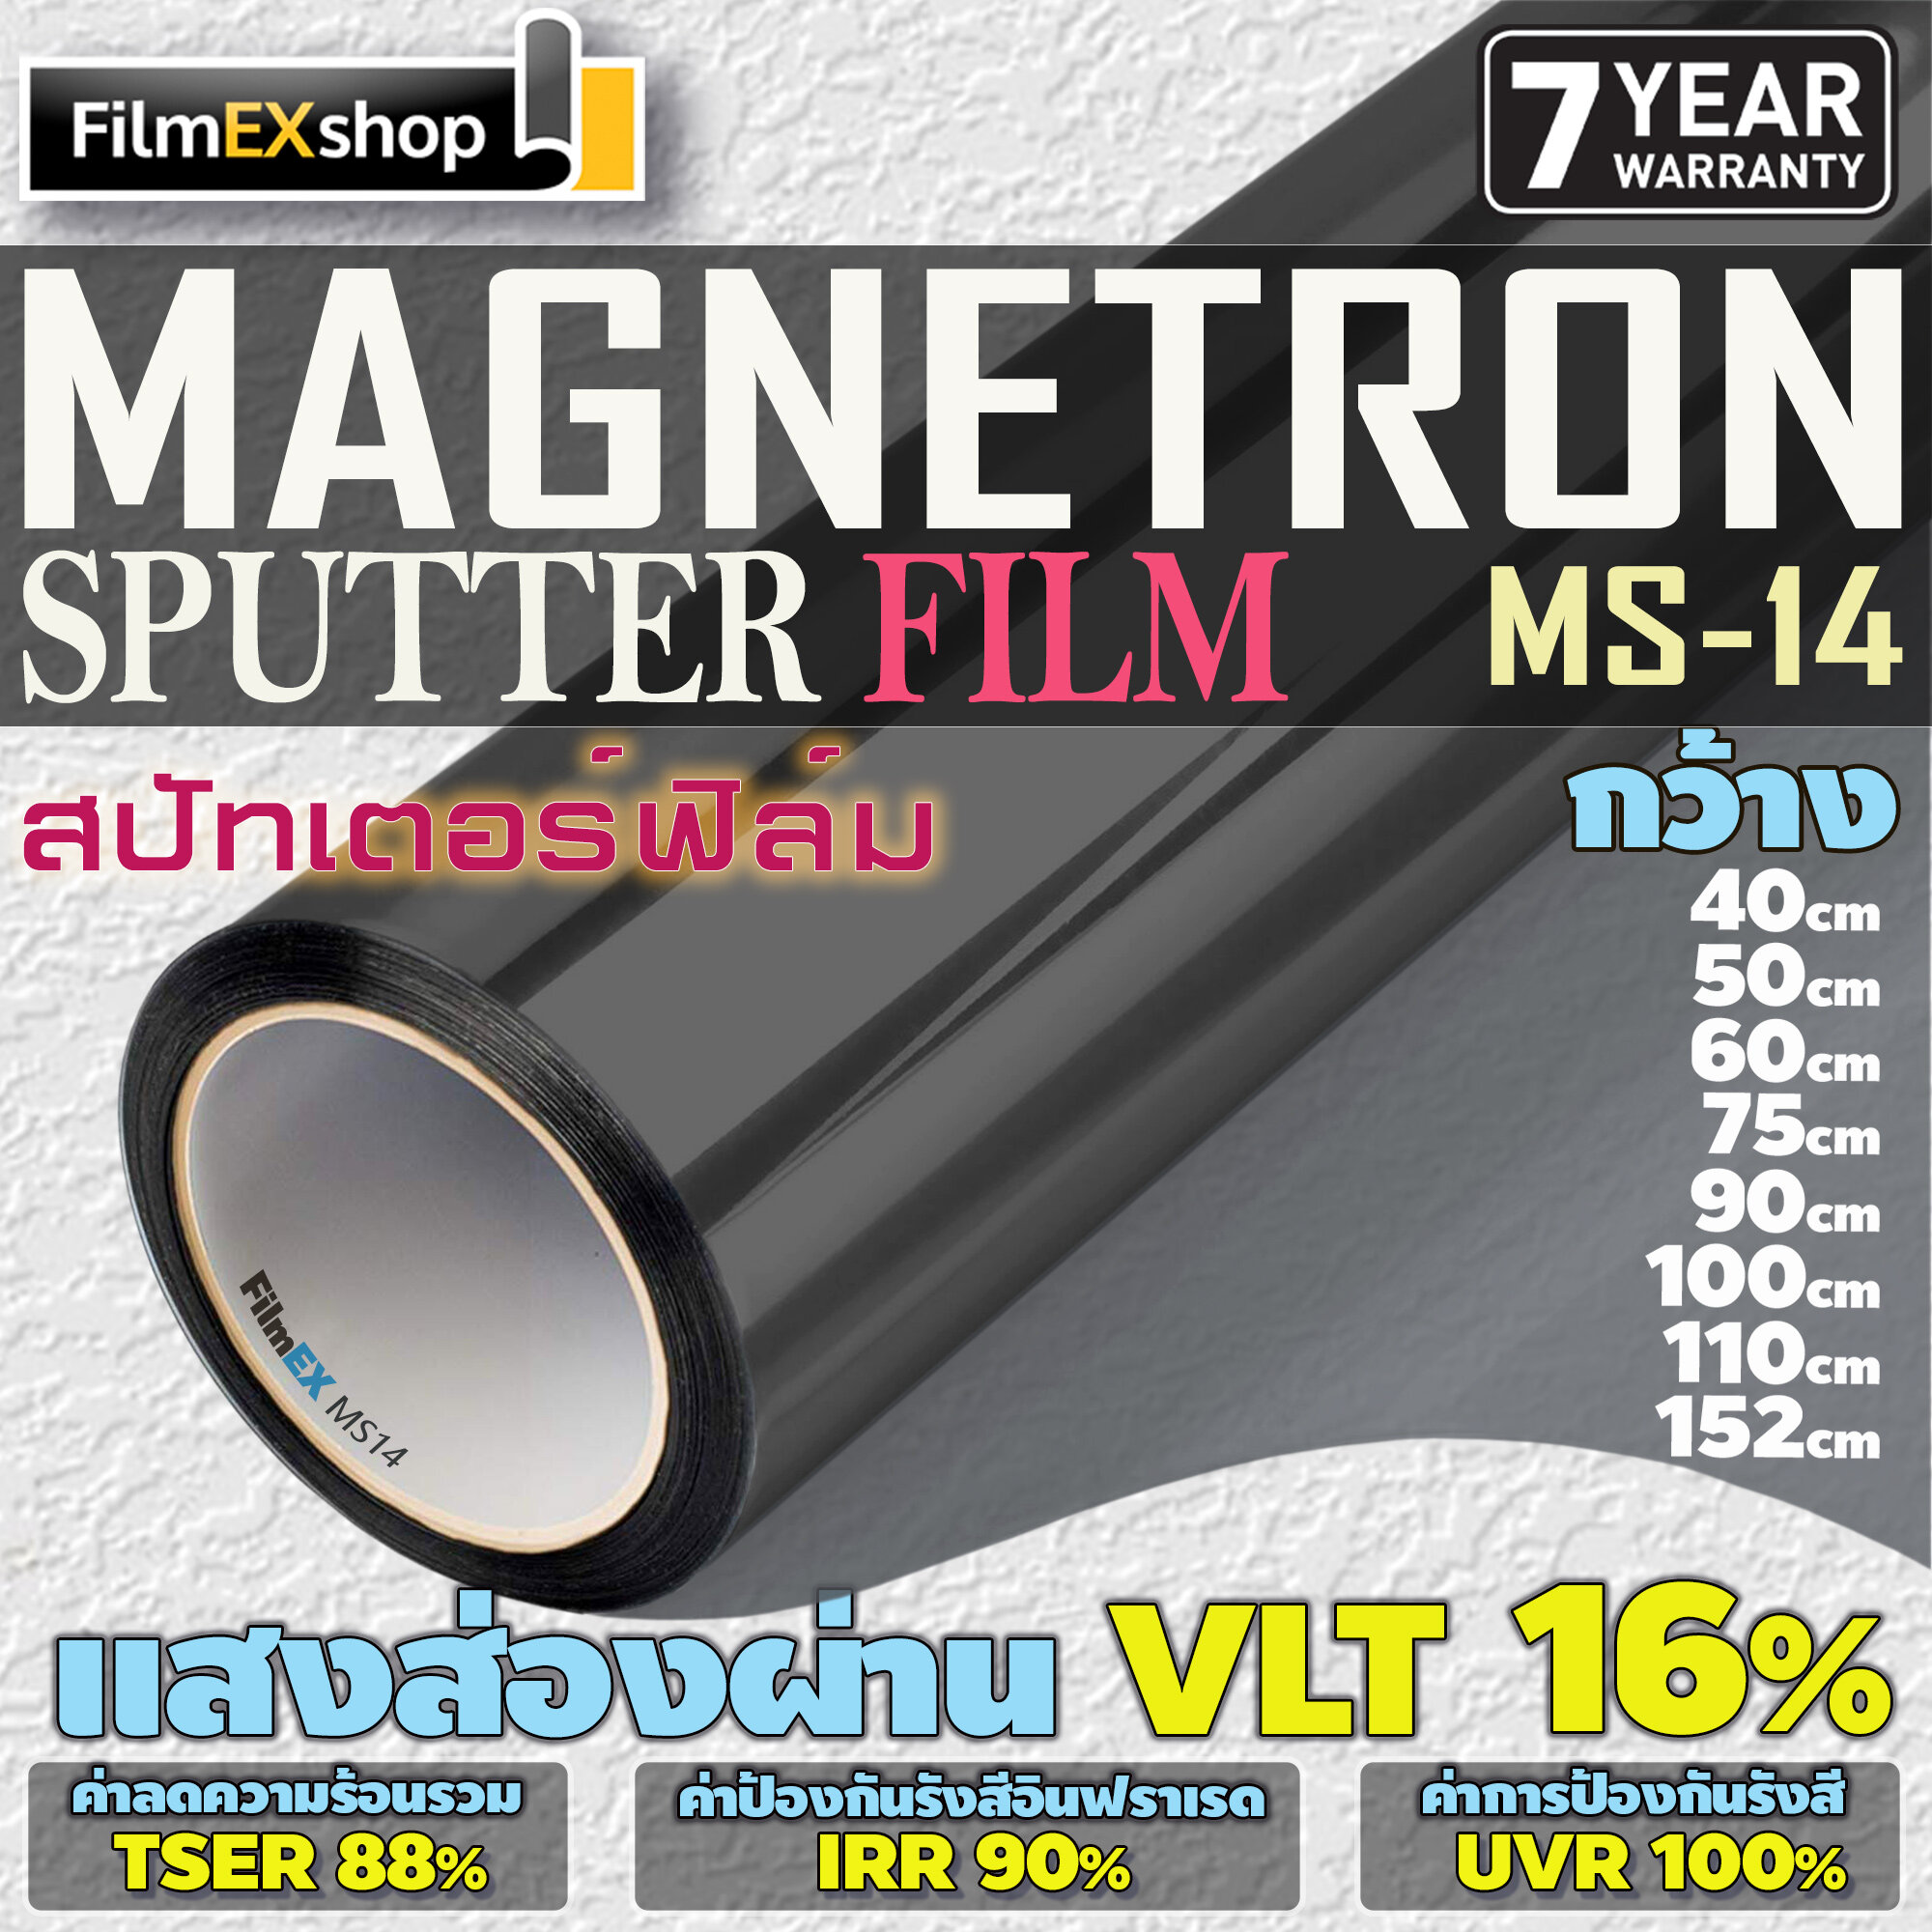 MS-14 MAGNETRON SPUTTERING WINDOW FILM ฟิล์มรถยนต์  ฟิล์มกรองแสง ฟิล์มเคลือบอนุภาคโลหะ